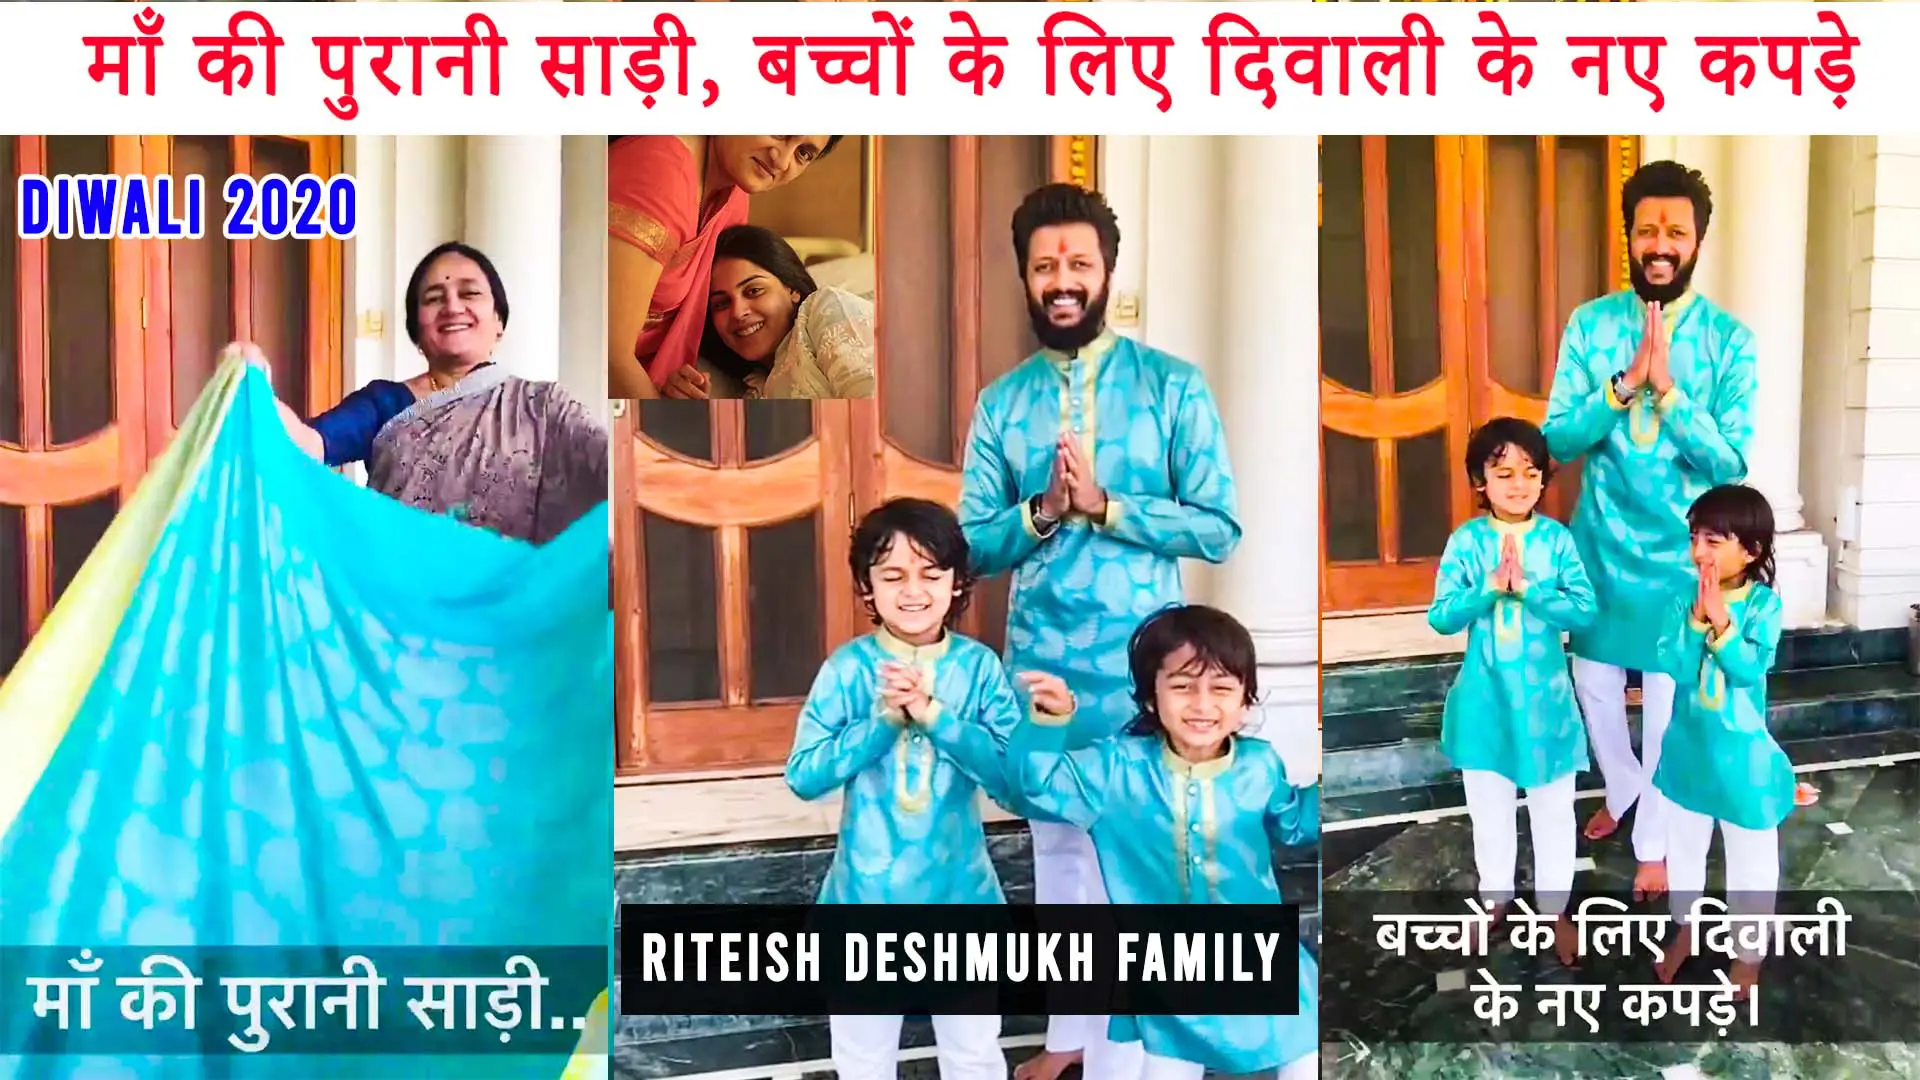 riteish deshmukh family diwali celebration 2020